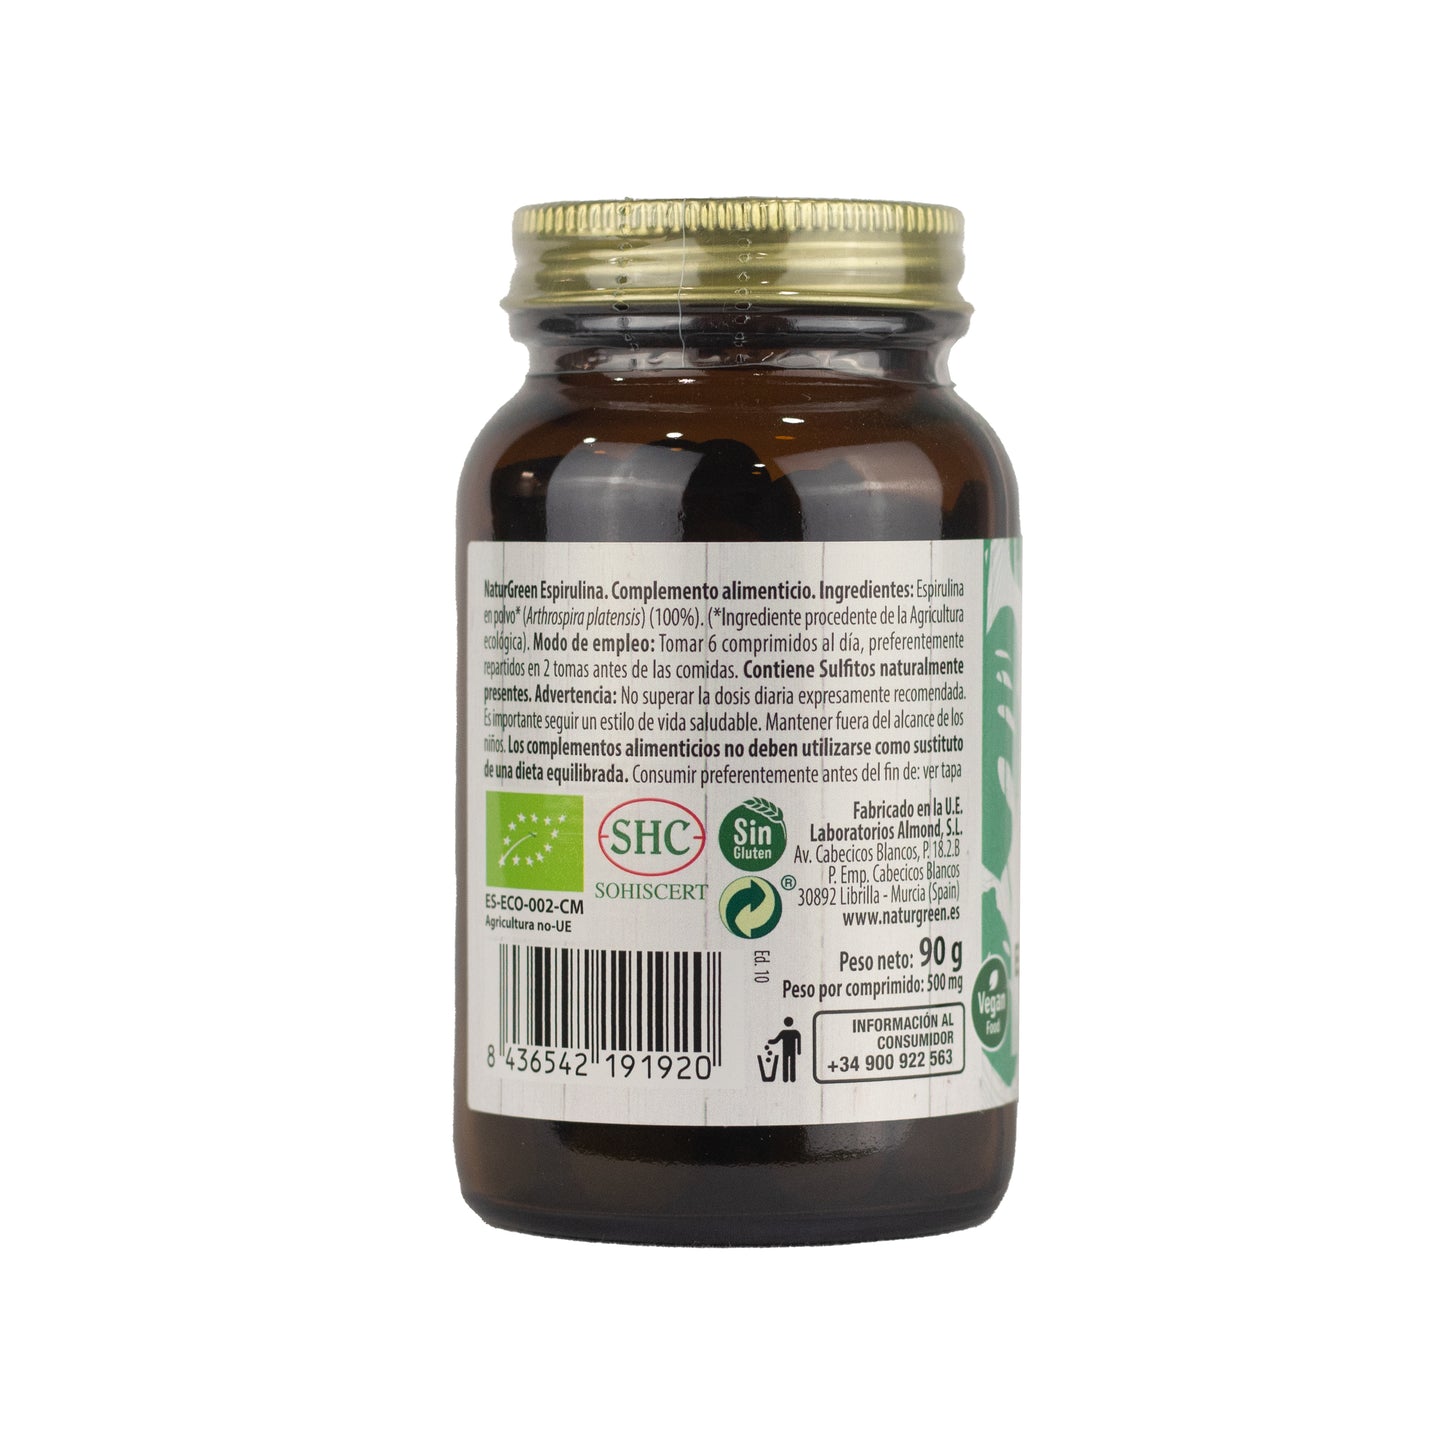 Espirulina Ecológica 180 comprimidos NaturGreen